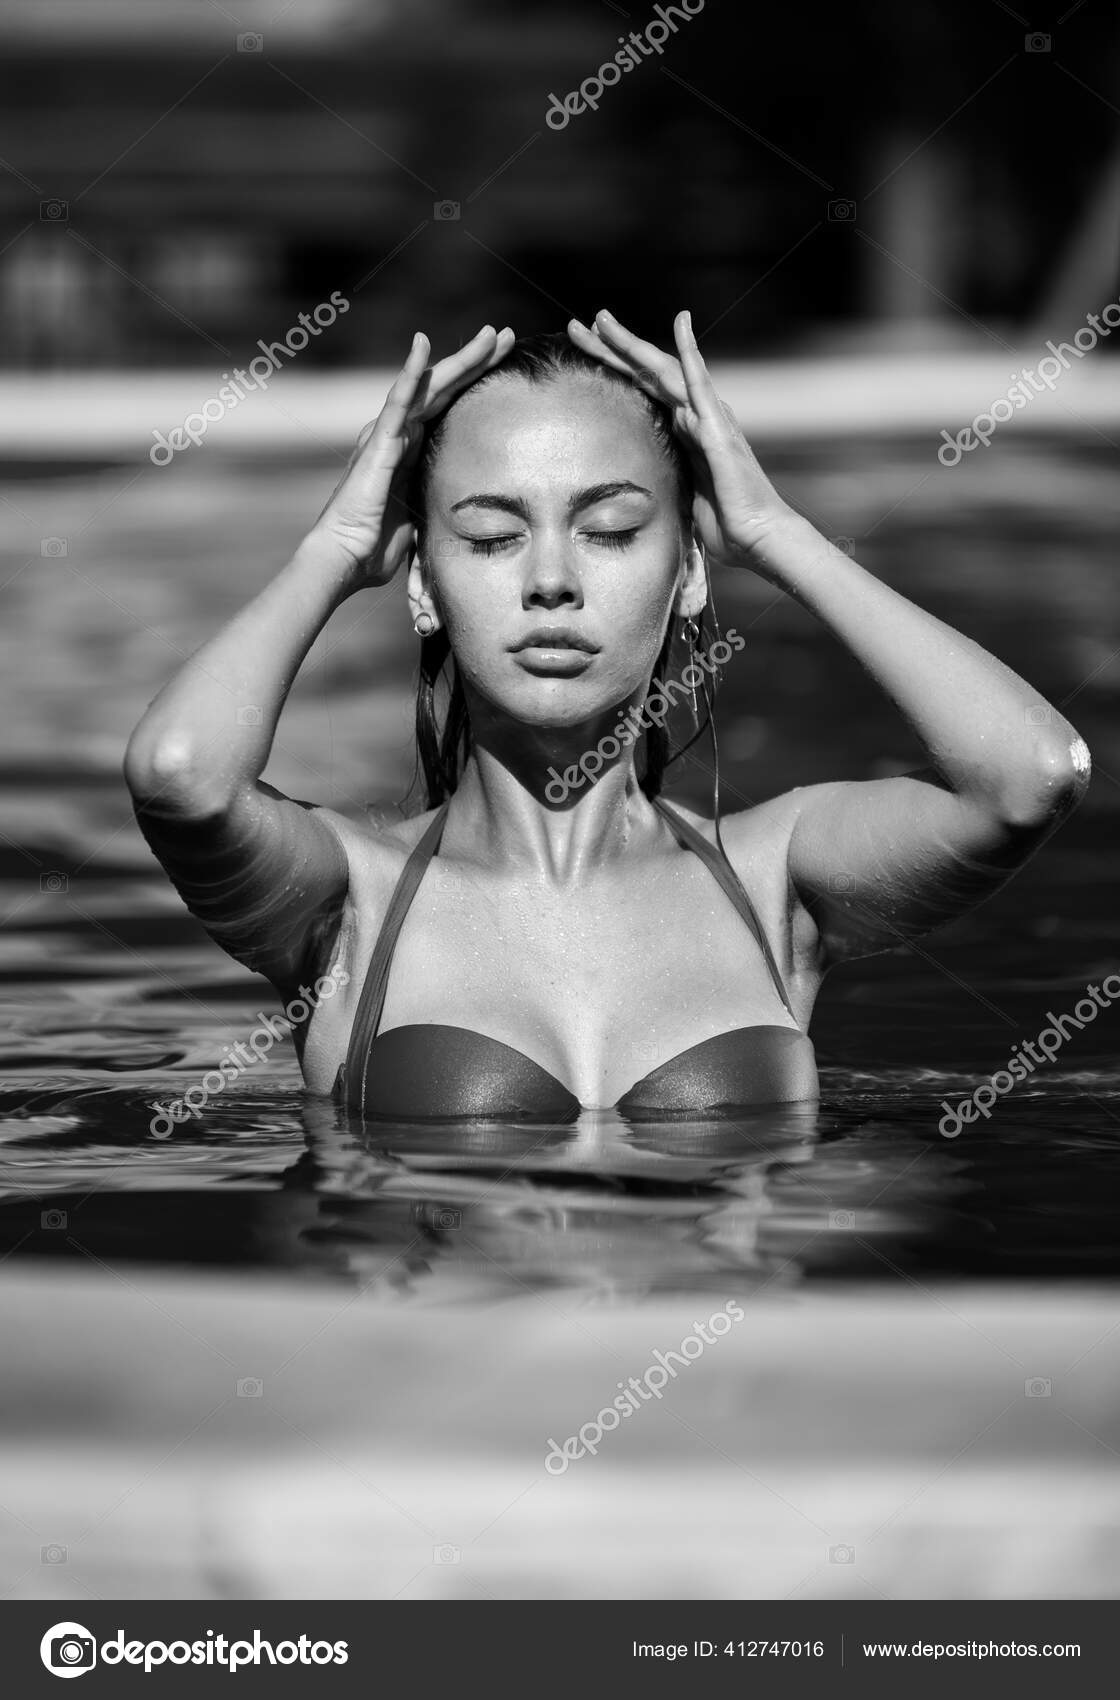 https://st4.depositphotos.com/1012146/41274/i/1600/depositphotos_412747[001-999]-stock-photo-portrait-beautiful-woman-silver-swimsuit.jpg